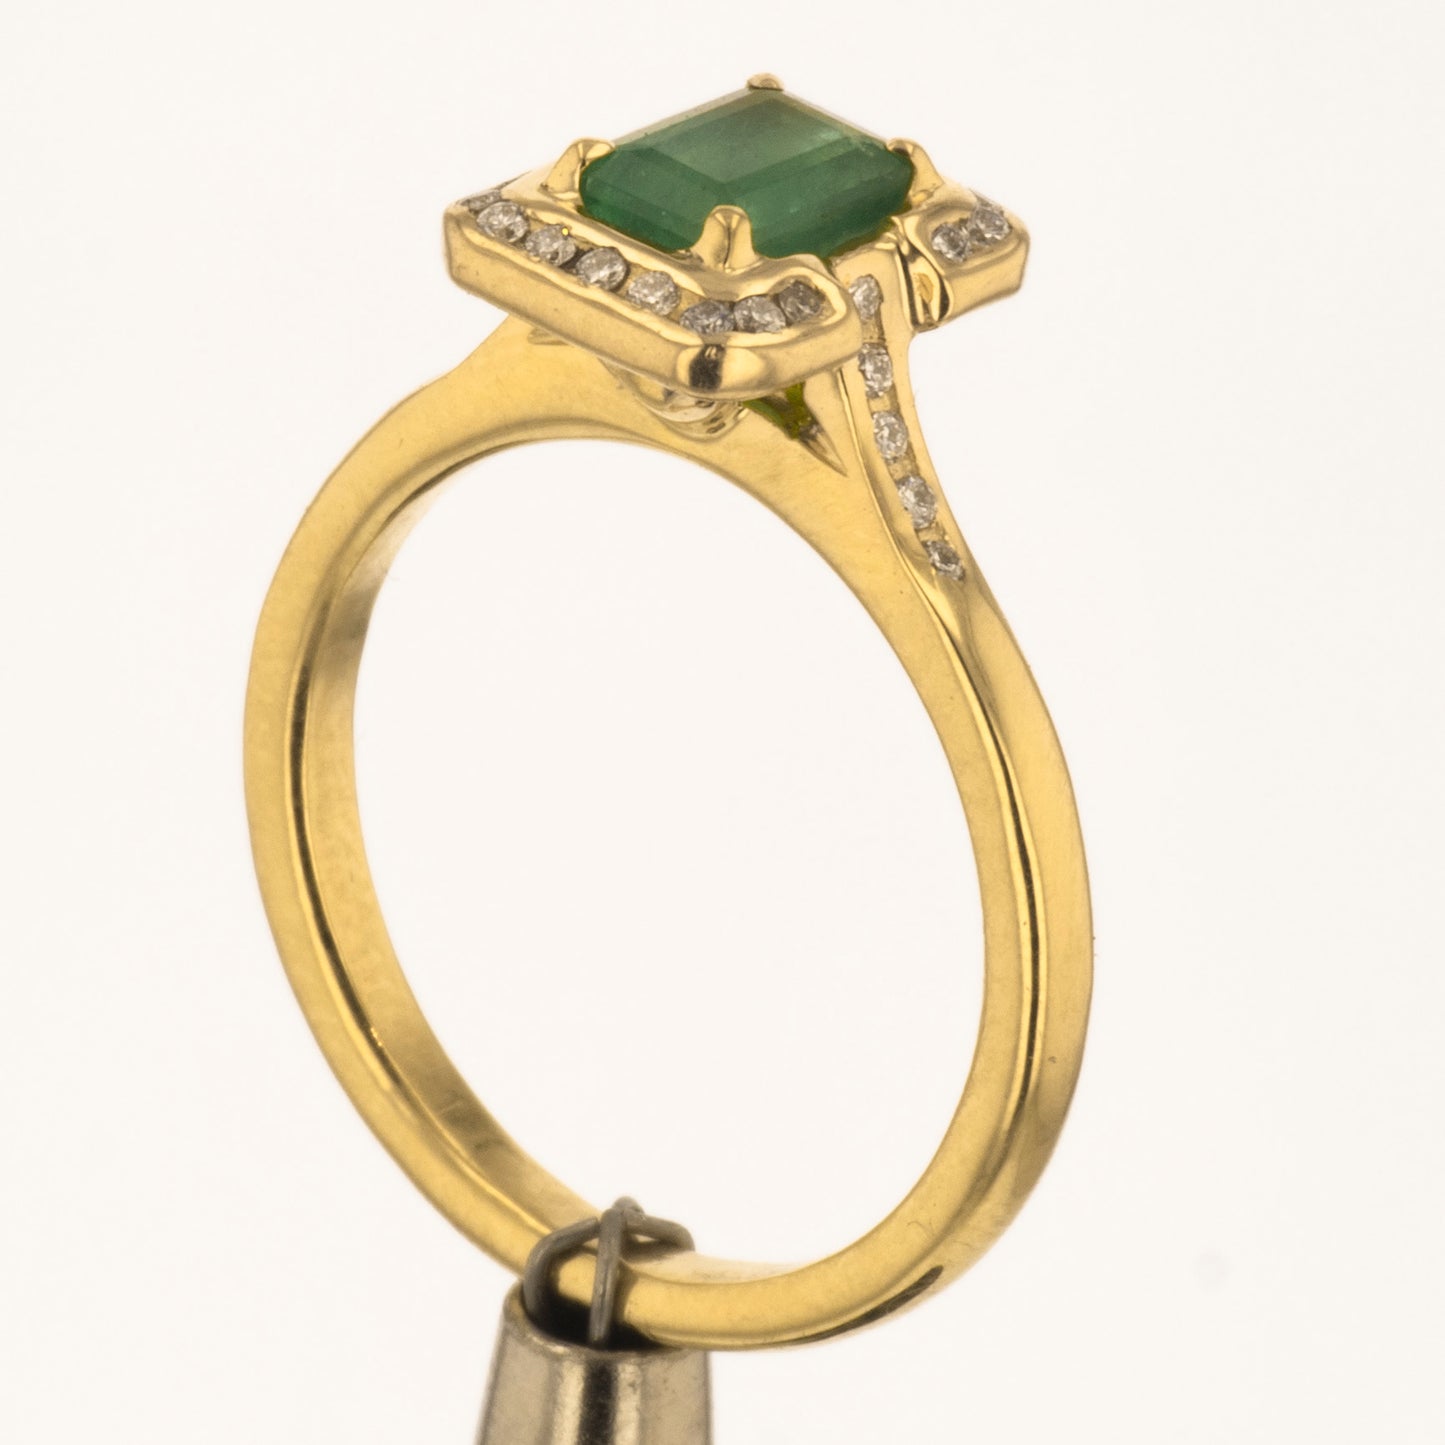 Emerald and diamonds ring